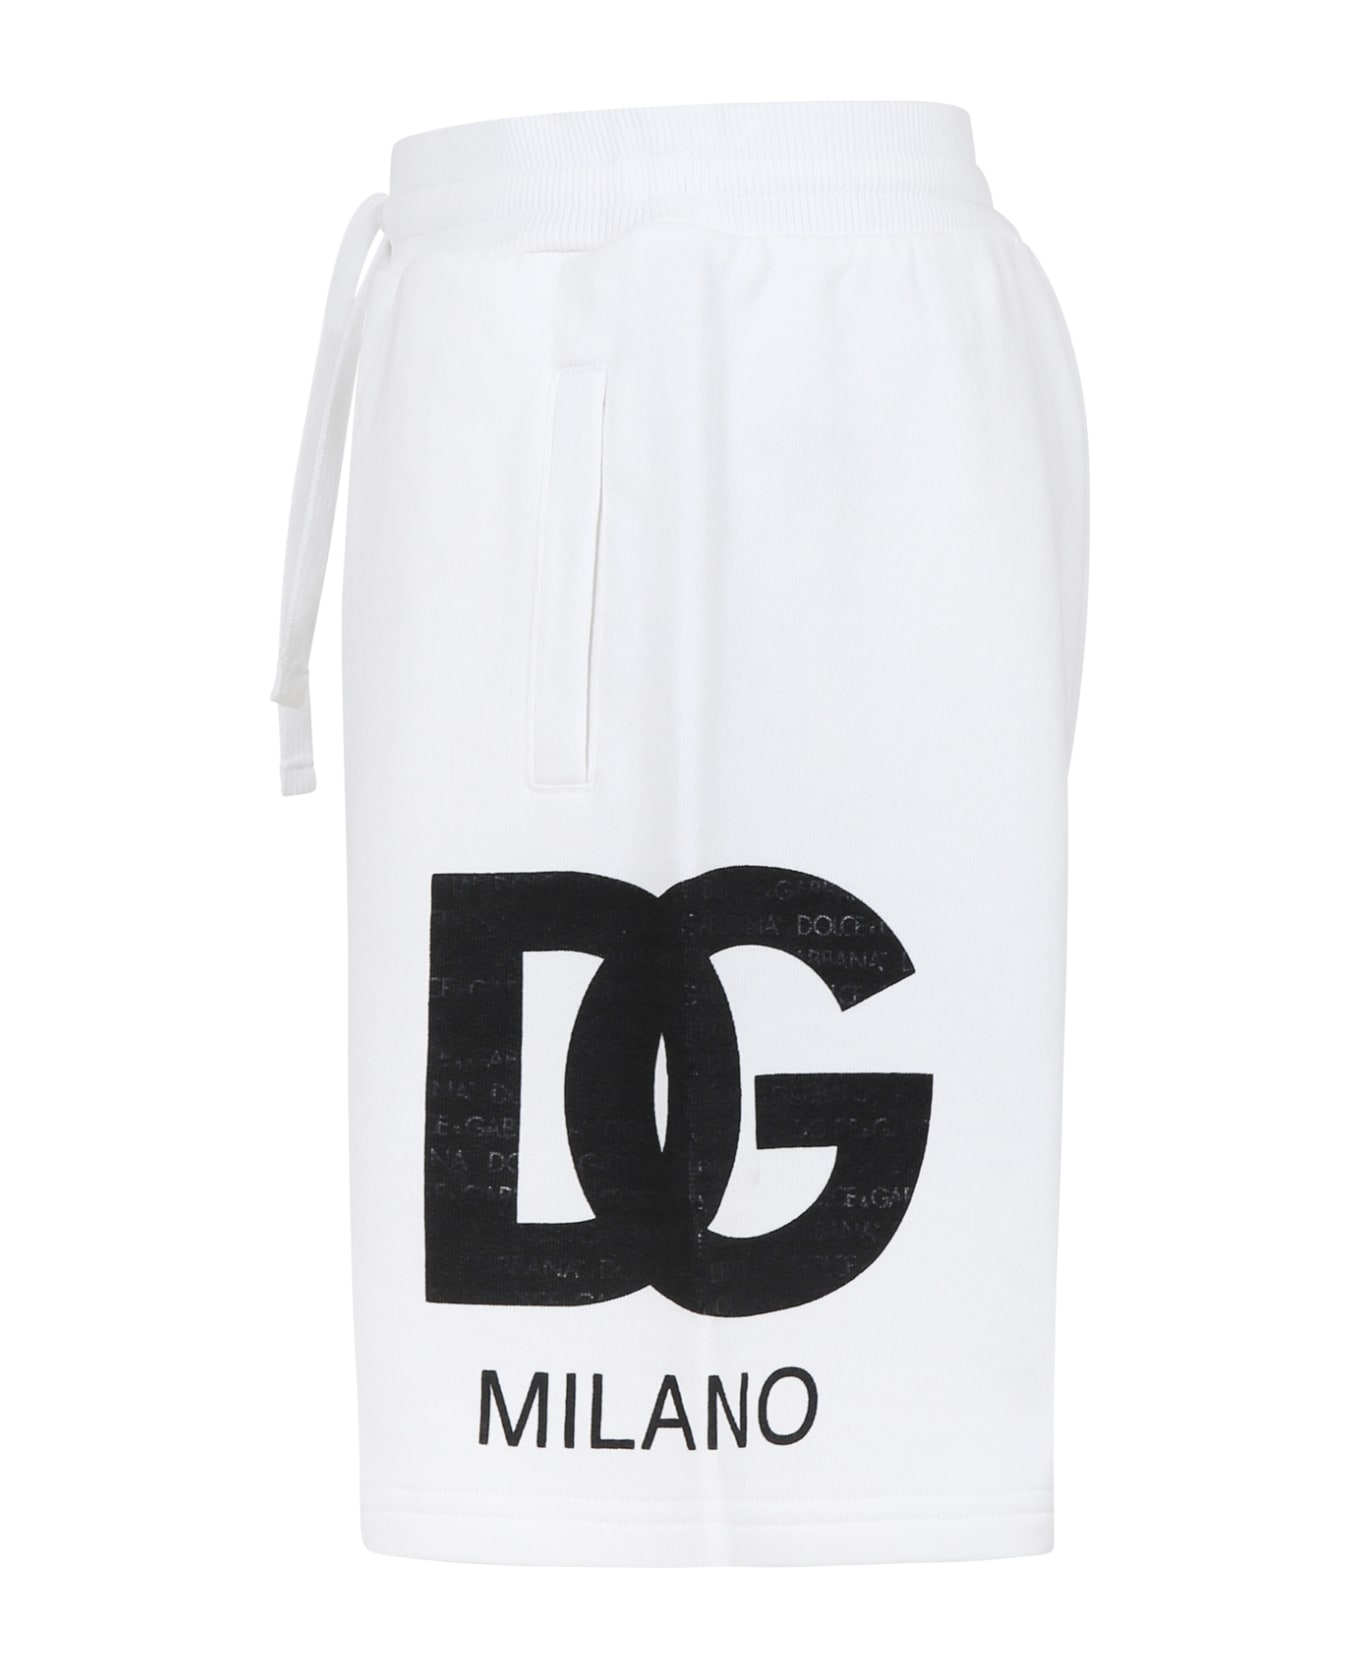 Dolce & Gabbana White Shorts For Boy With Iconic Monogram - Bianco